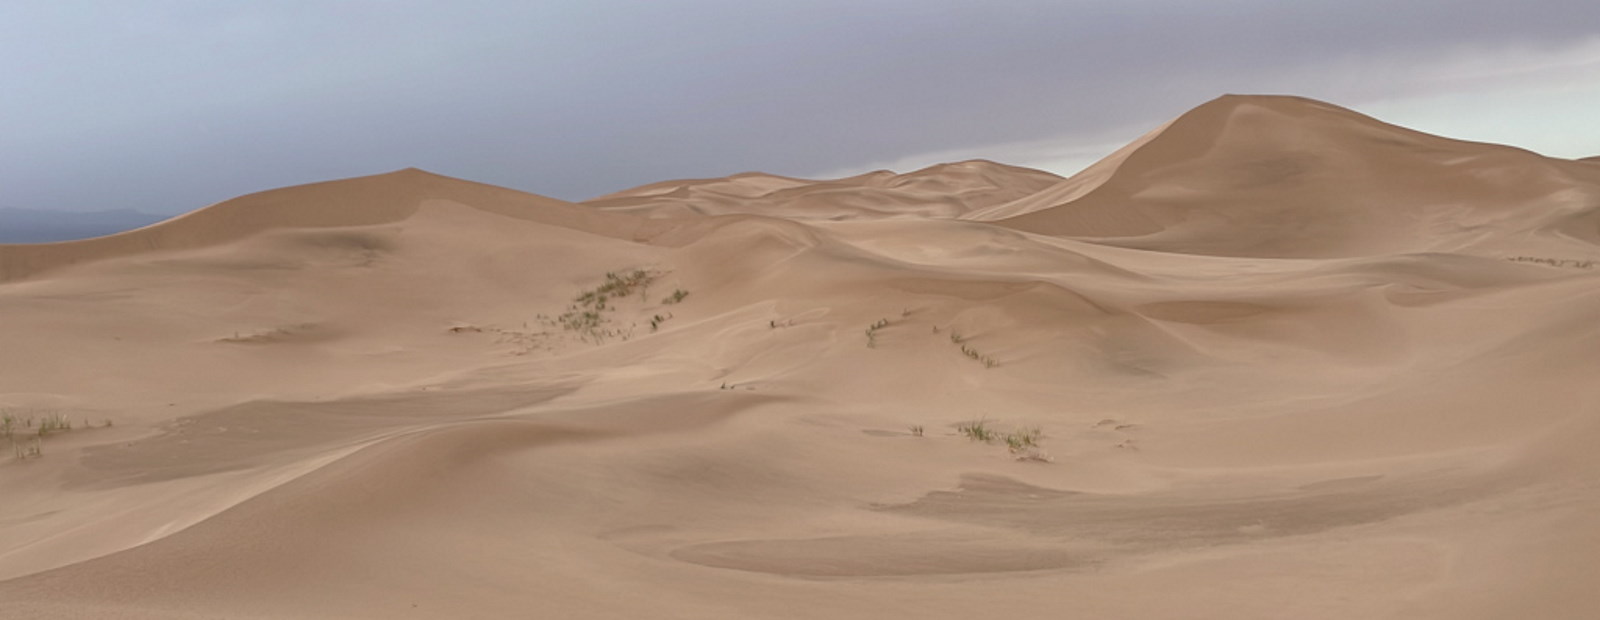 A Sandstorm in the Gobi Desert